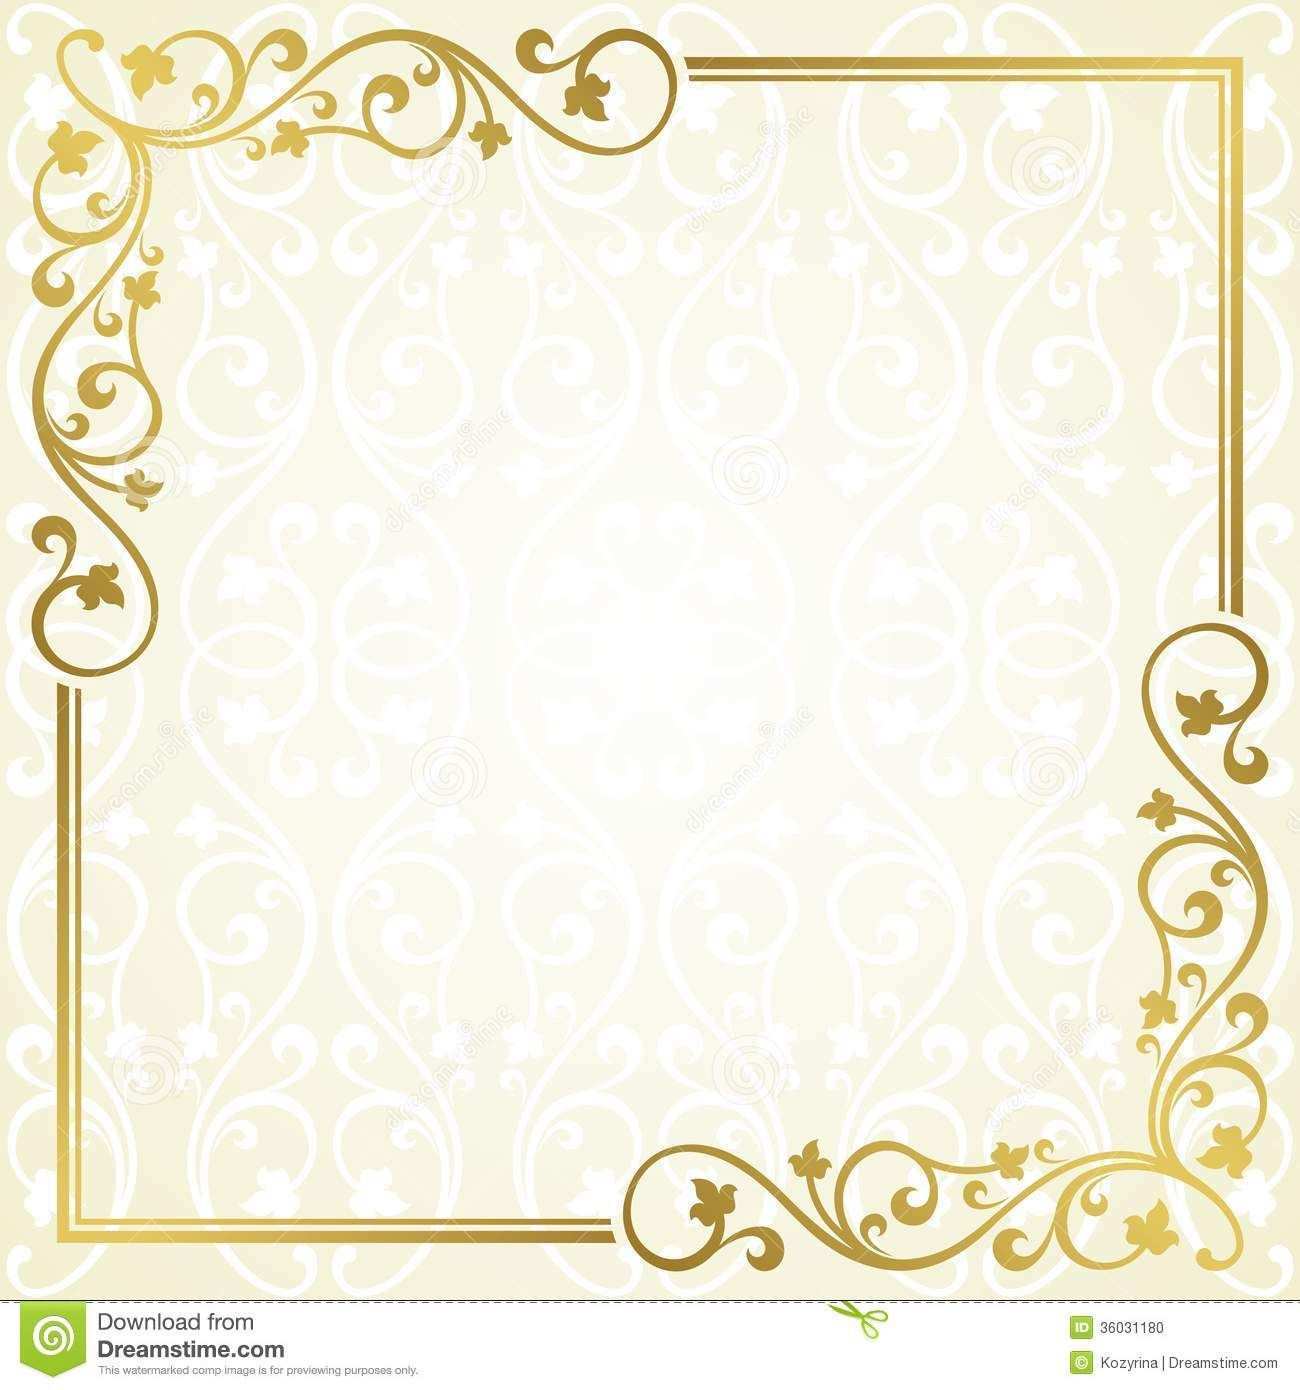 47 Standard Blank Invitation Card Template Design Templates with Blank Invitation Card Template Design